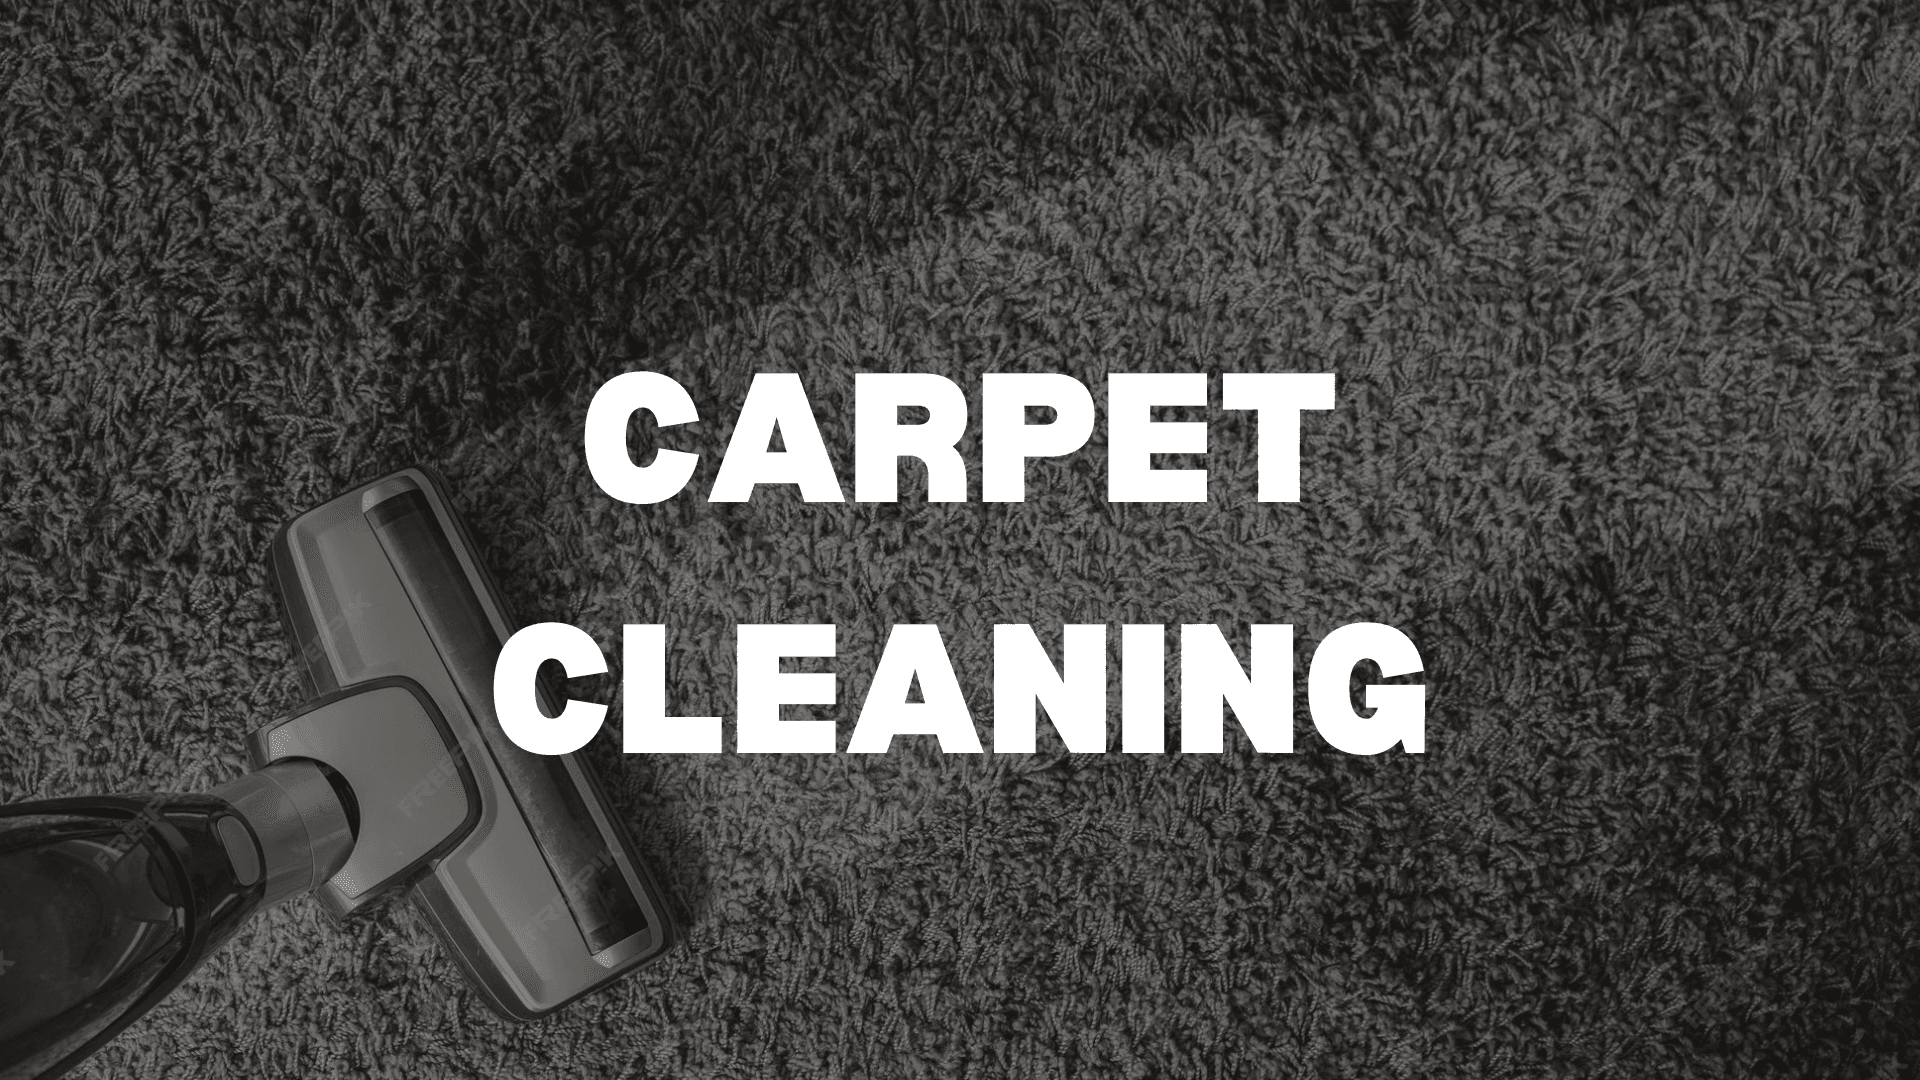 Carpet Cleaning Brisbane